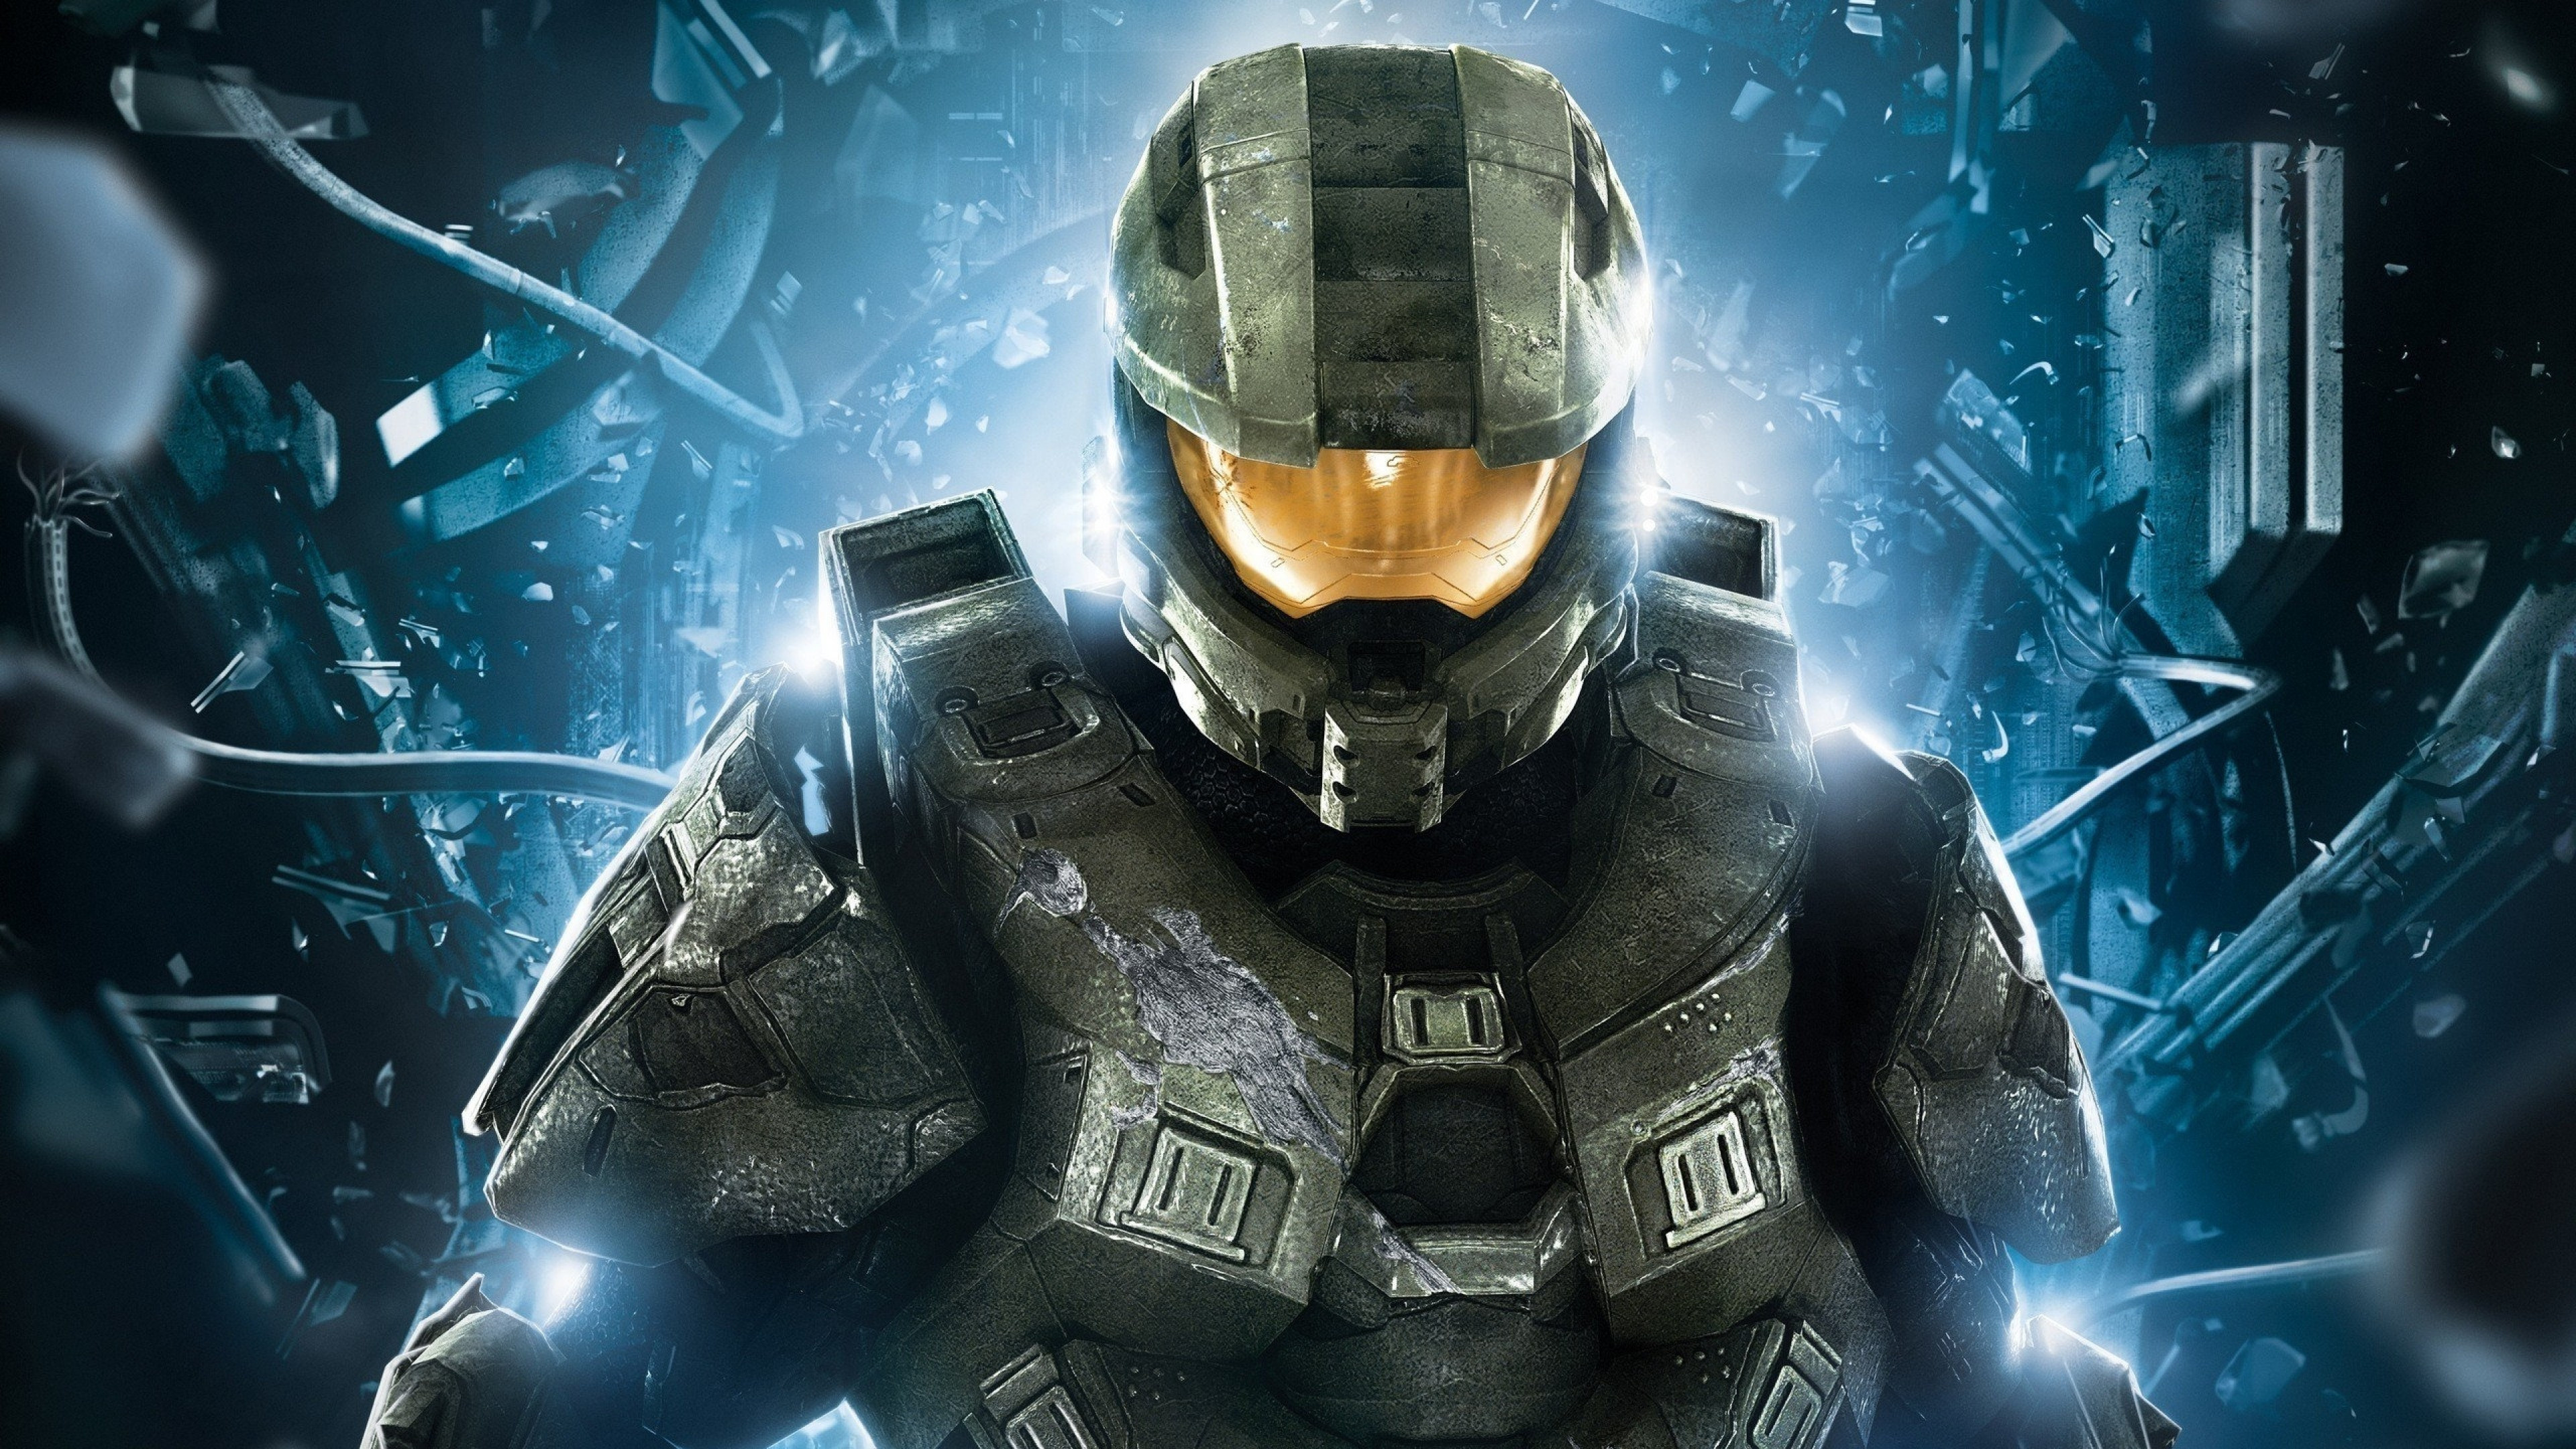 Halo 4 Master Chief Armor, Sci-fi wallpapers, 3840x2160 4K Desktop